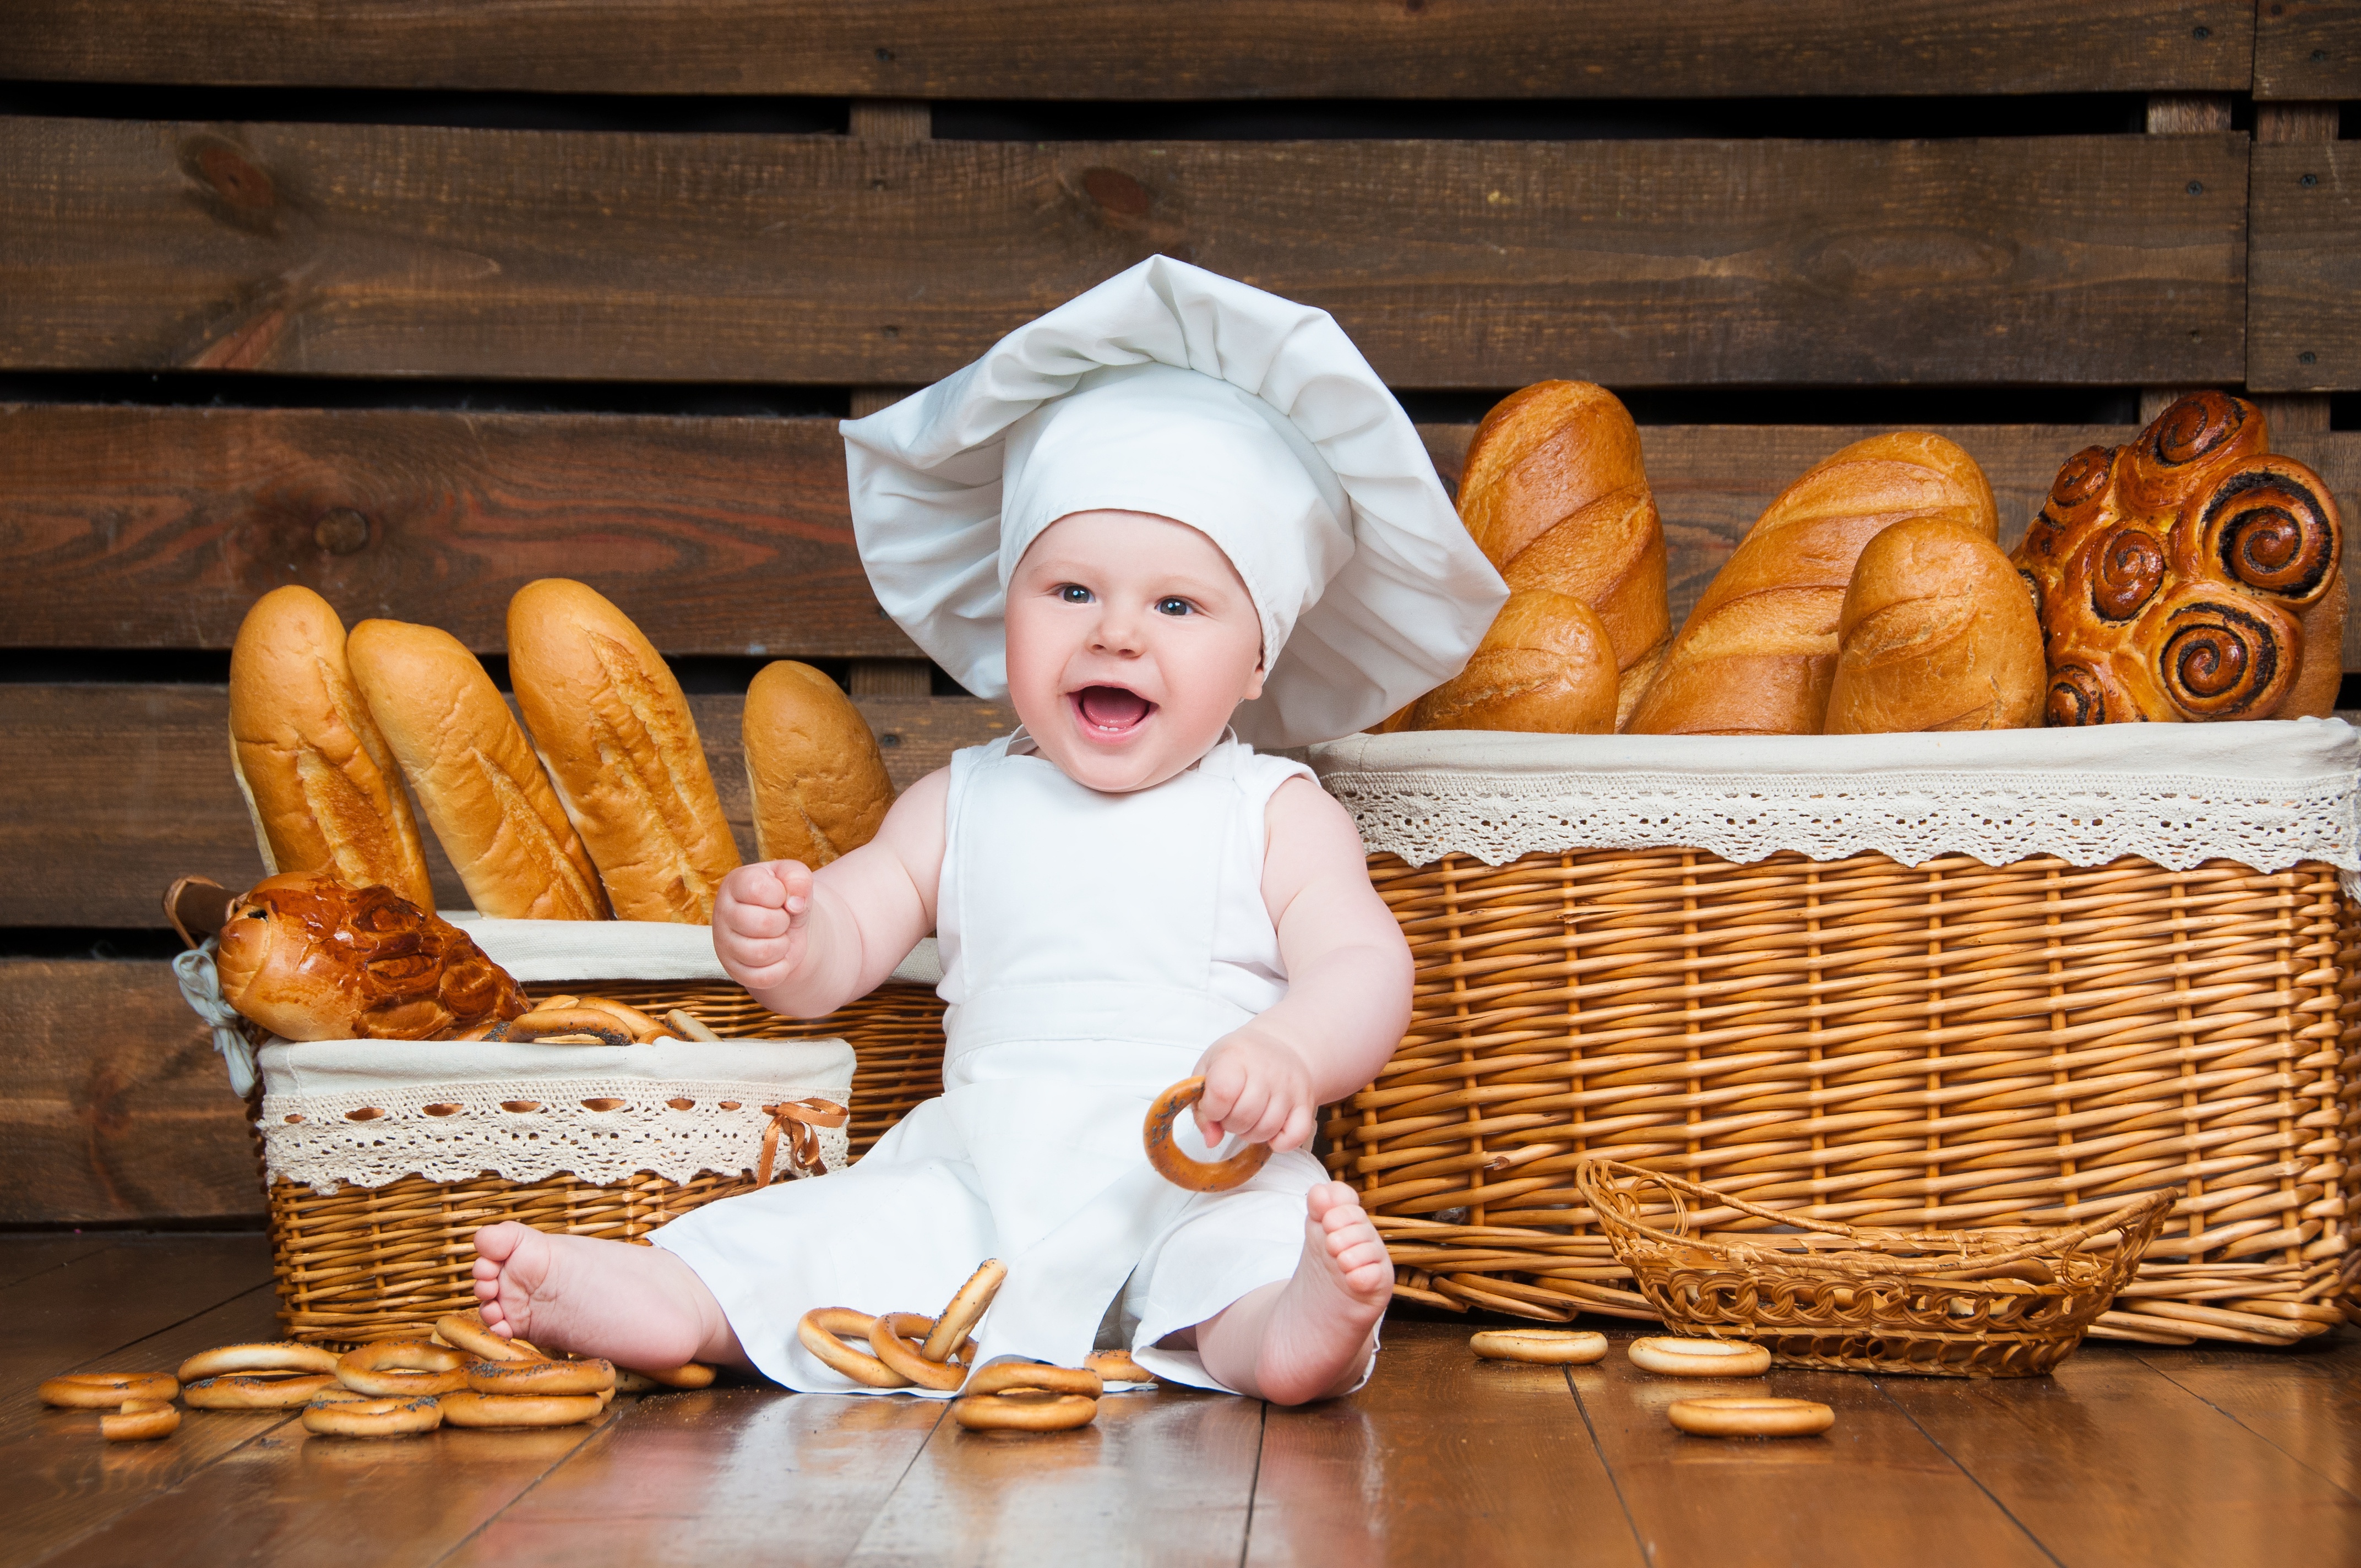 Baby Bread Chef Smile 4288x2848